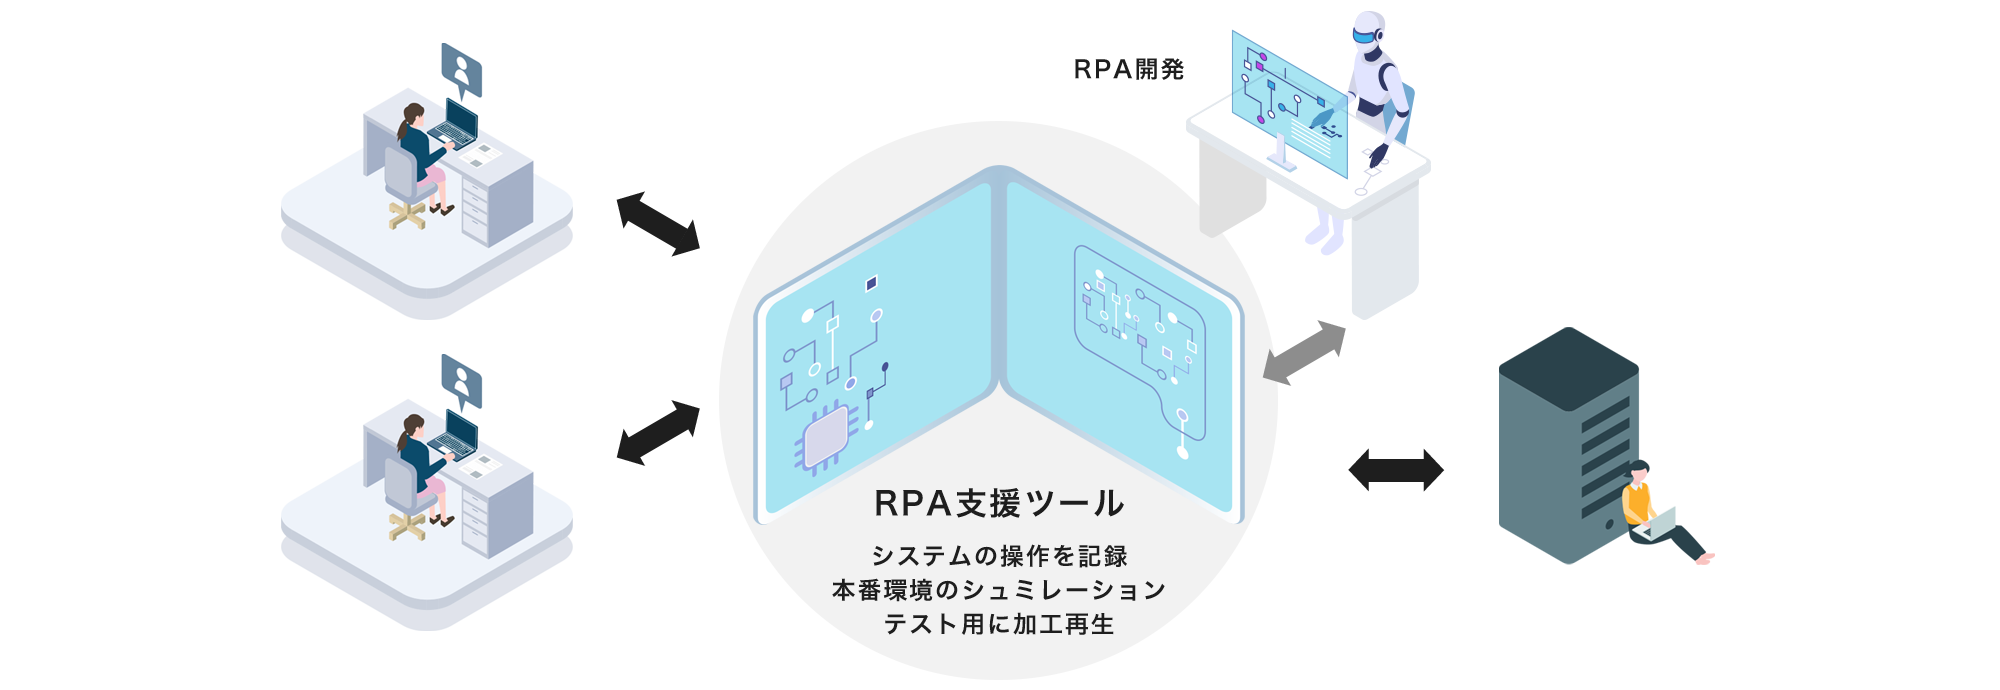 RPA Testerのイメージ図